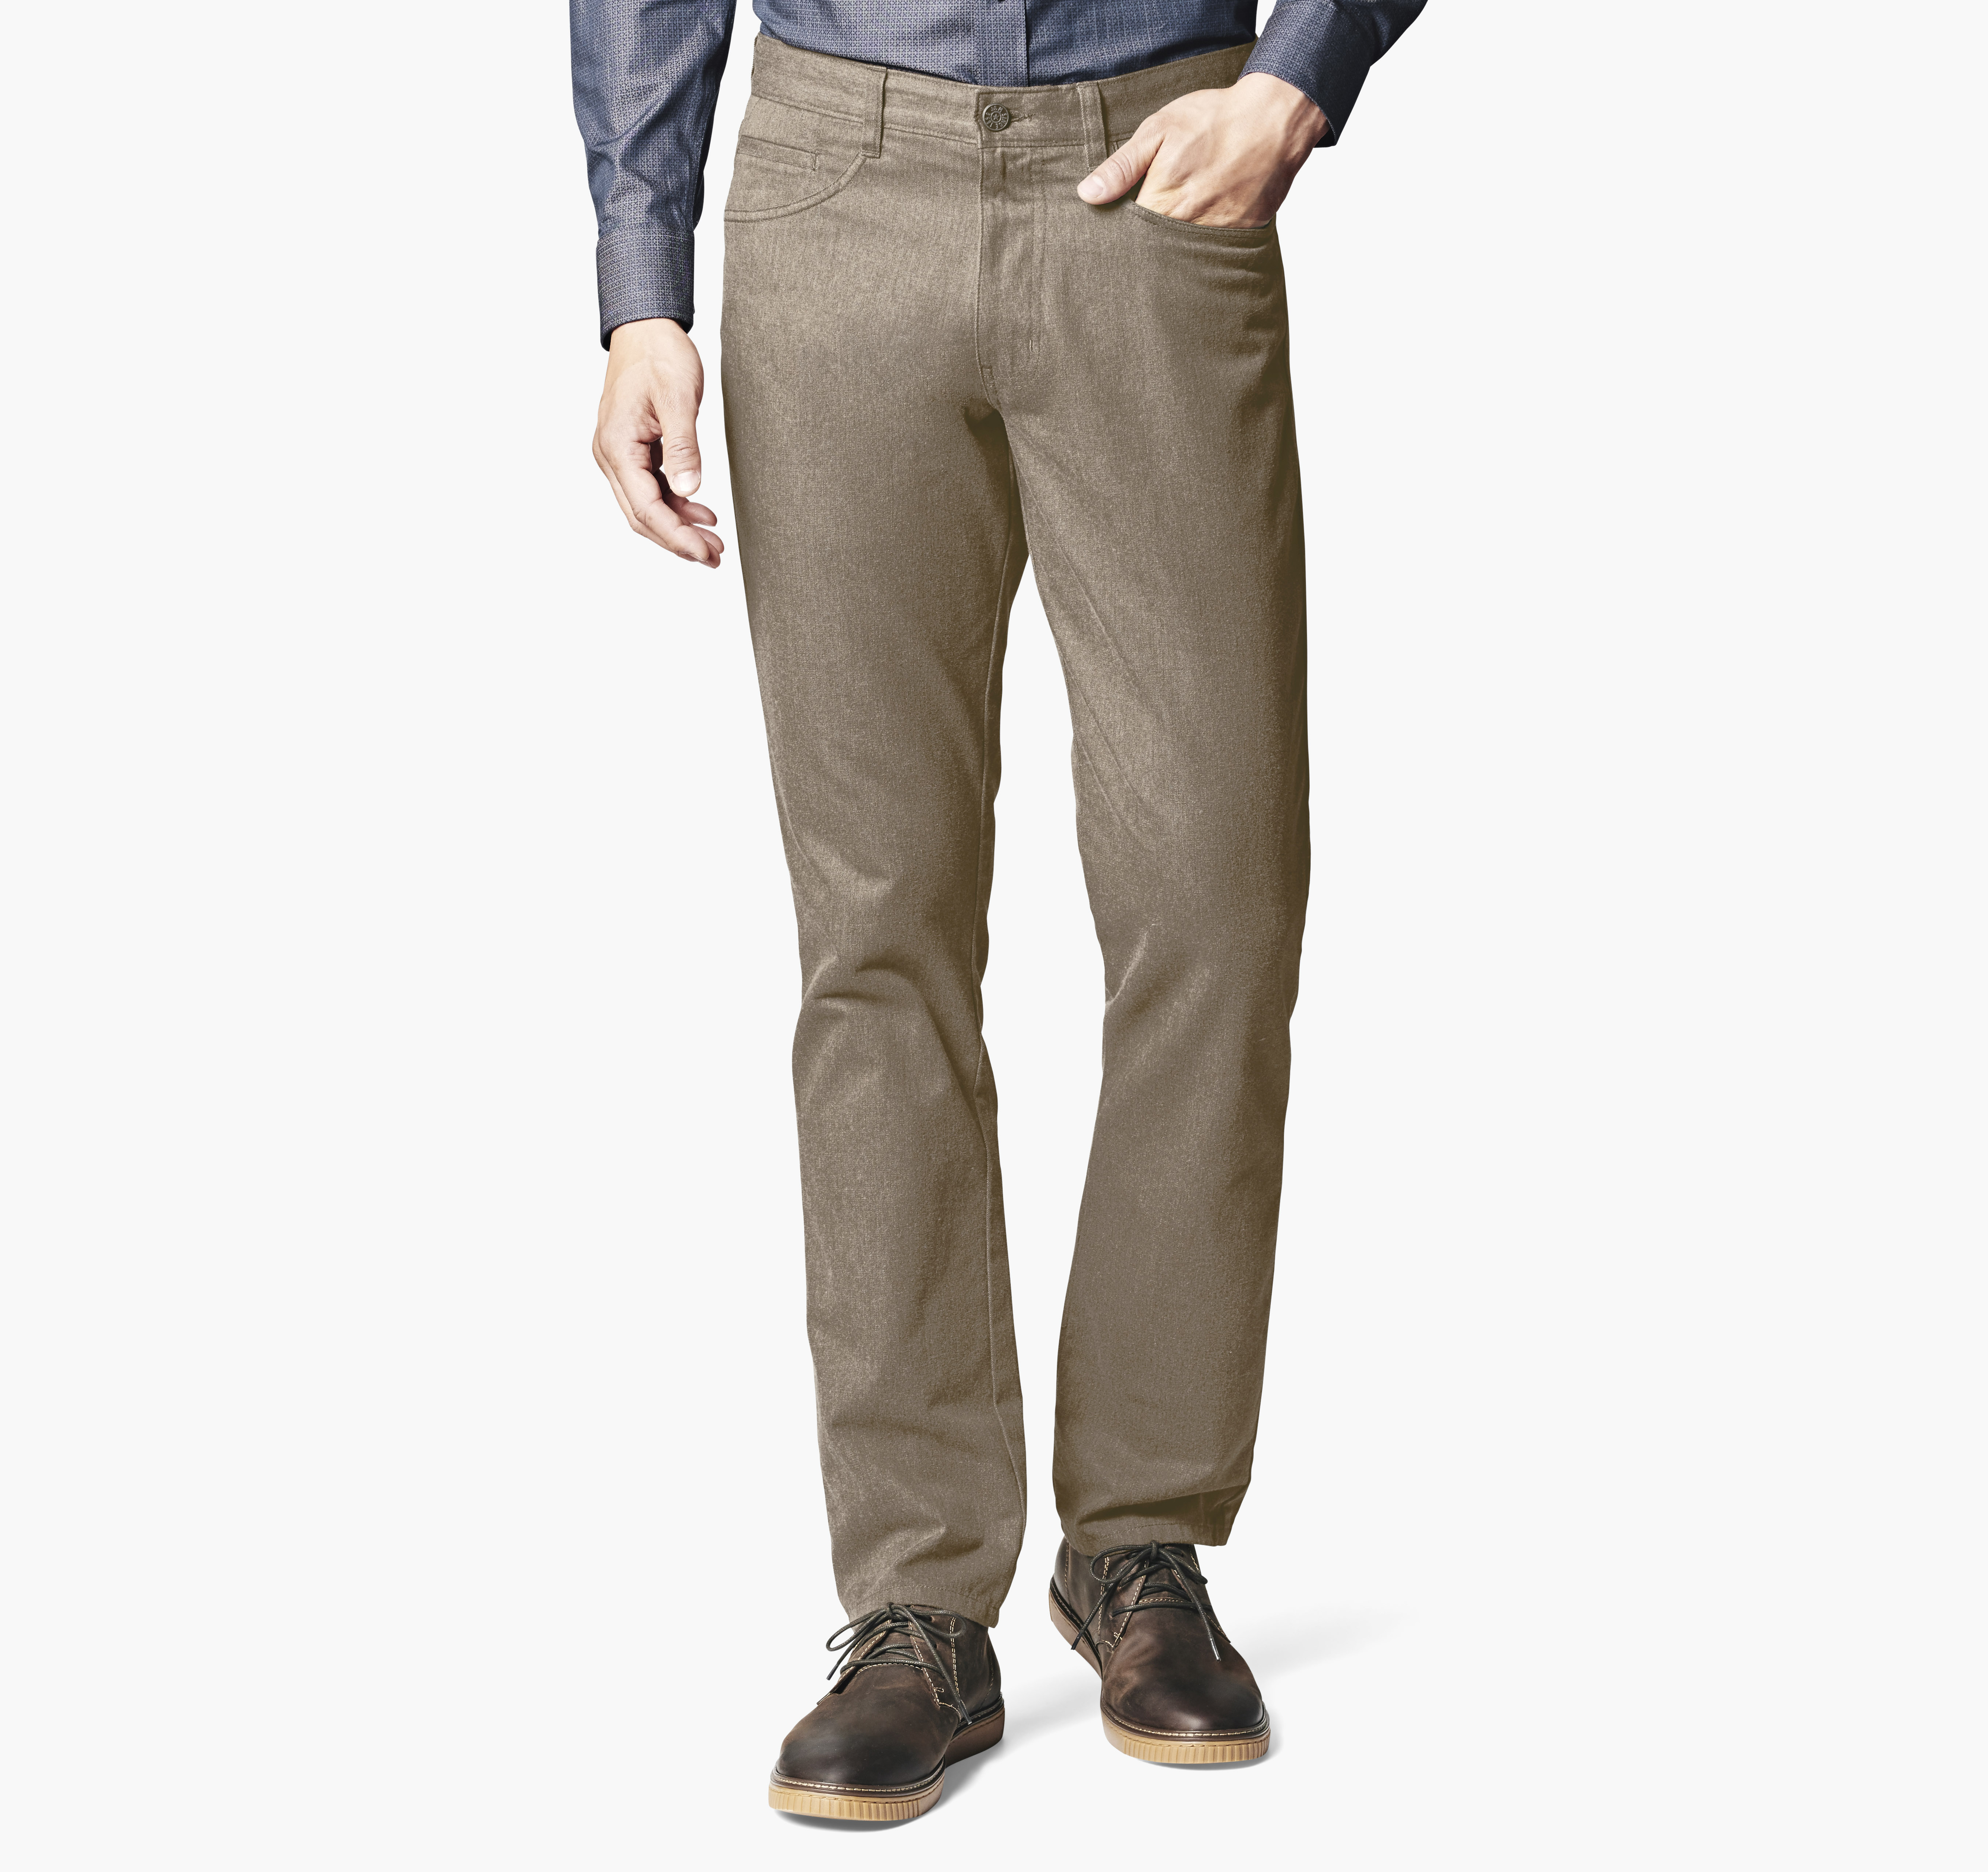 Johnston & Murphy Five-Pocket Straight-Fit Stretch Pants